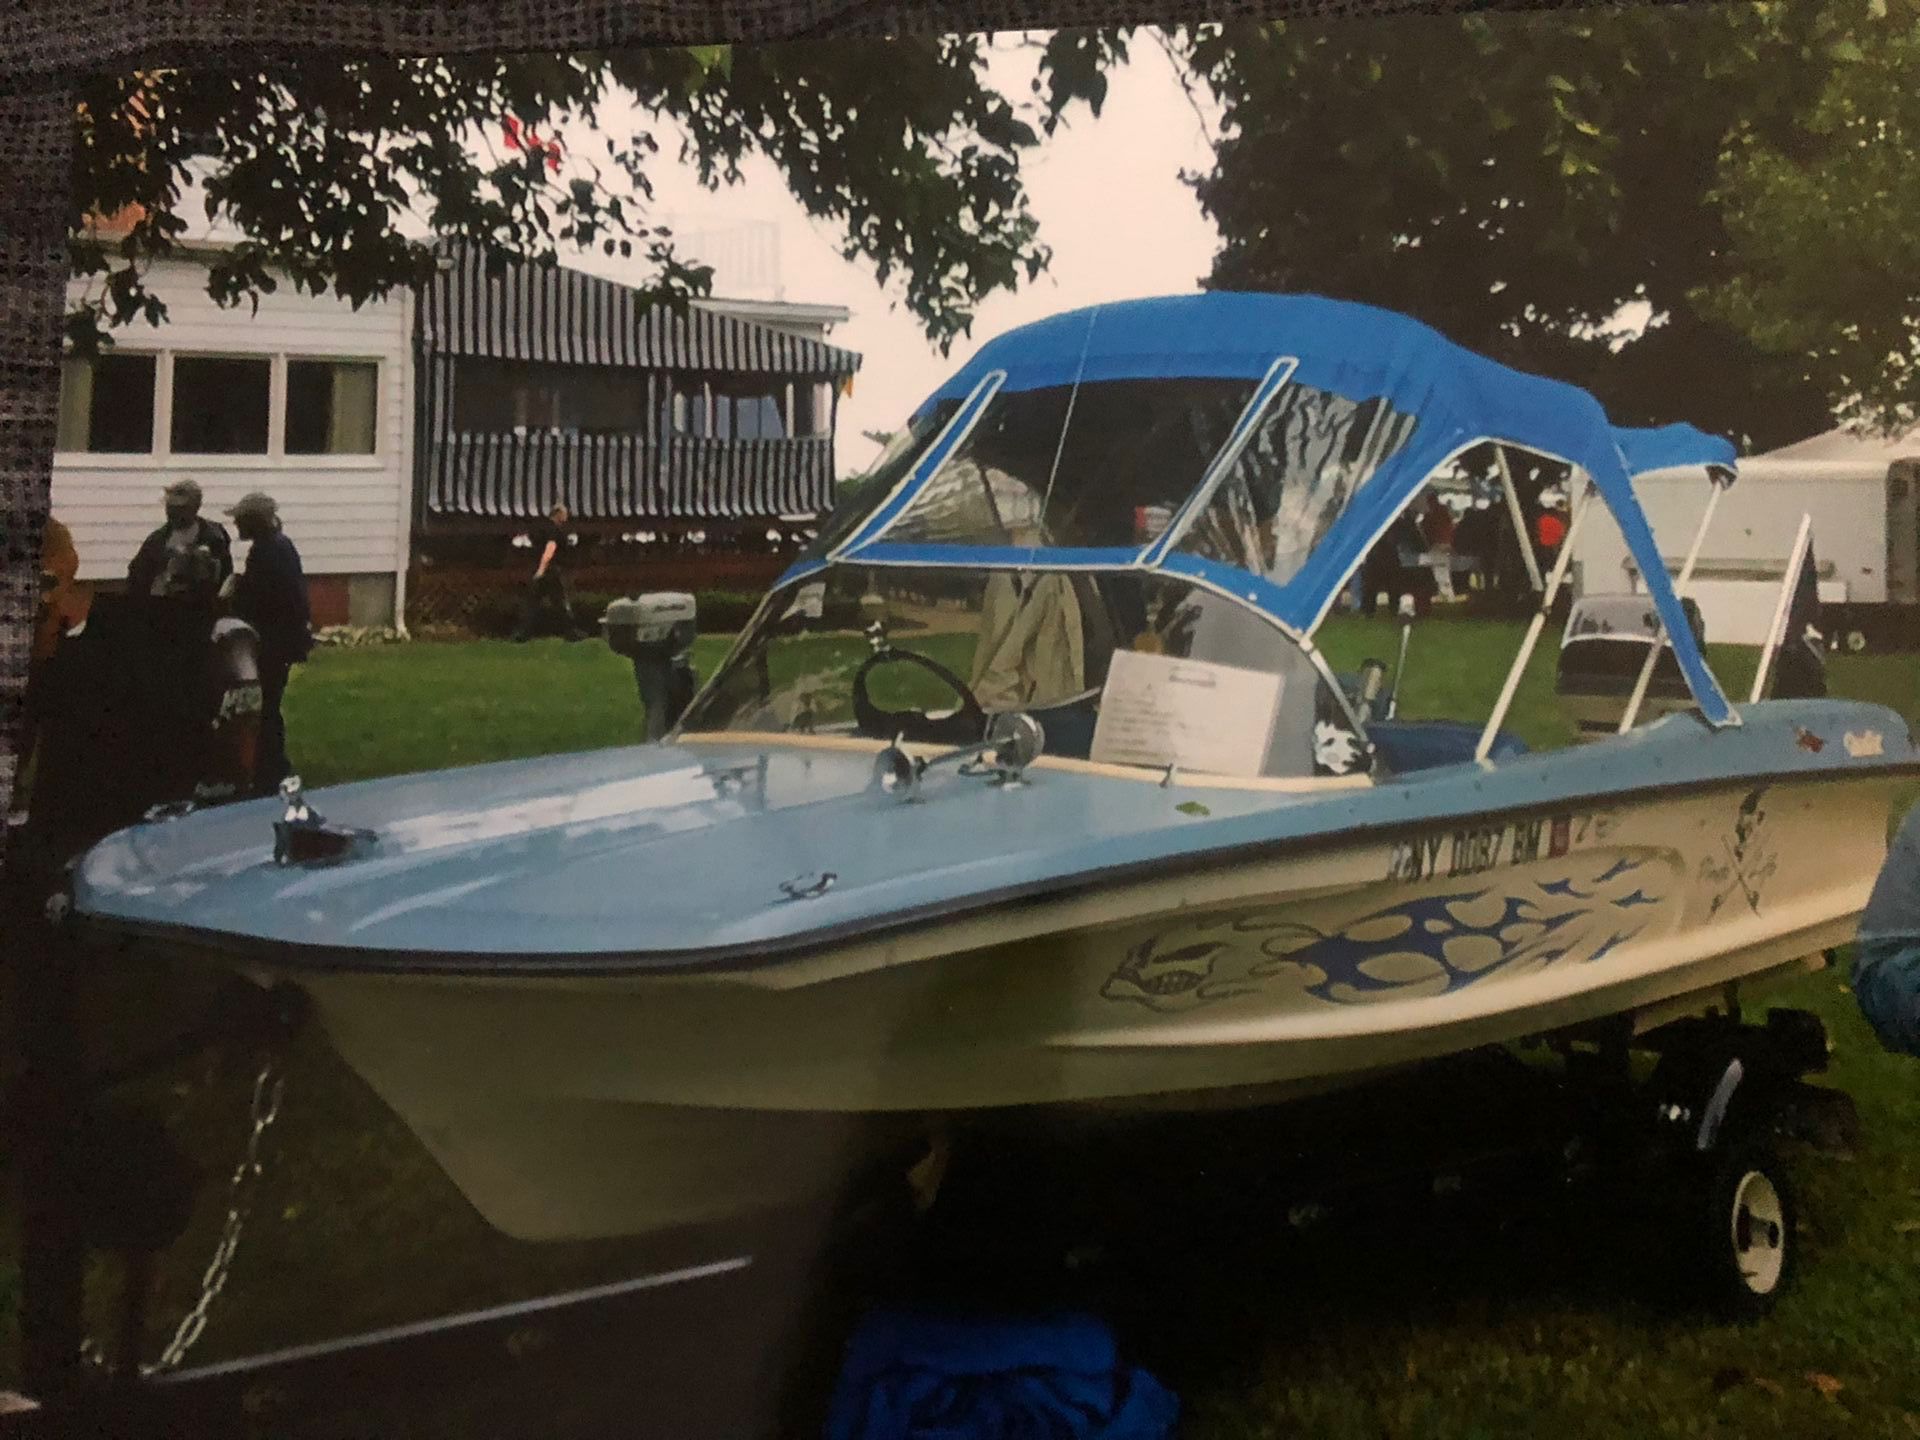 1964 Custom Craft Classic Boat - All Original Including Motor And Trailer